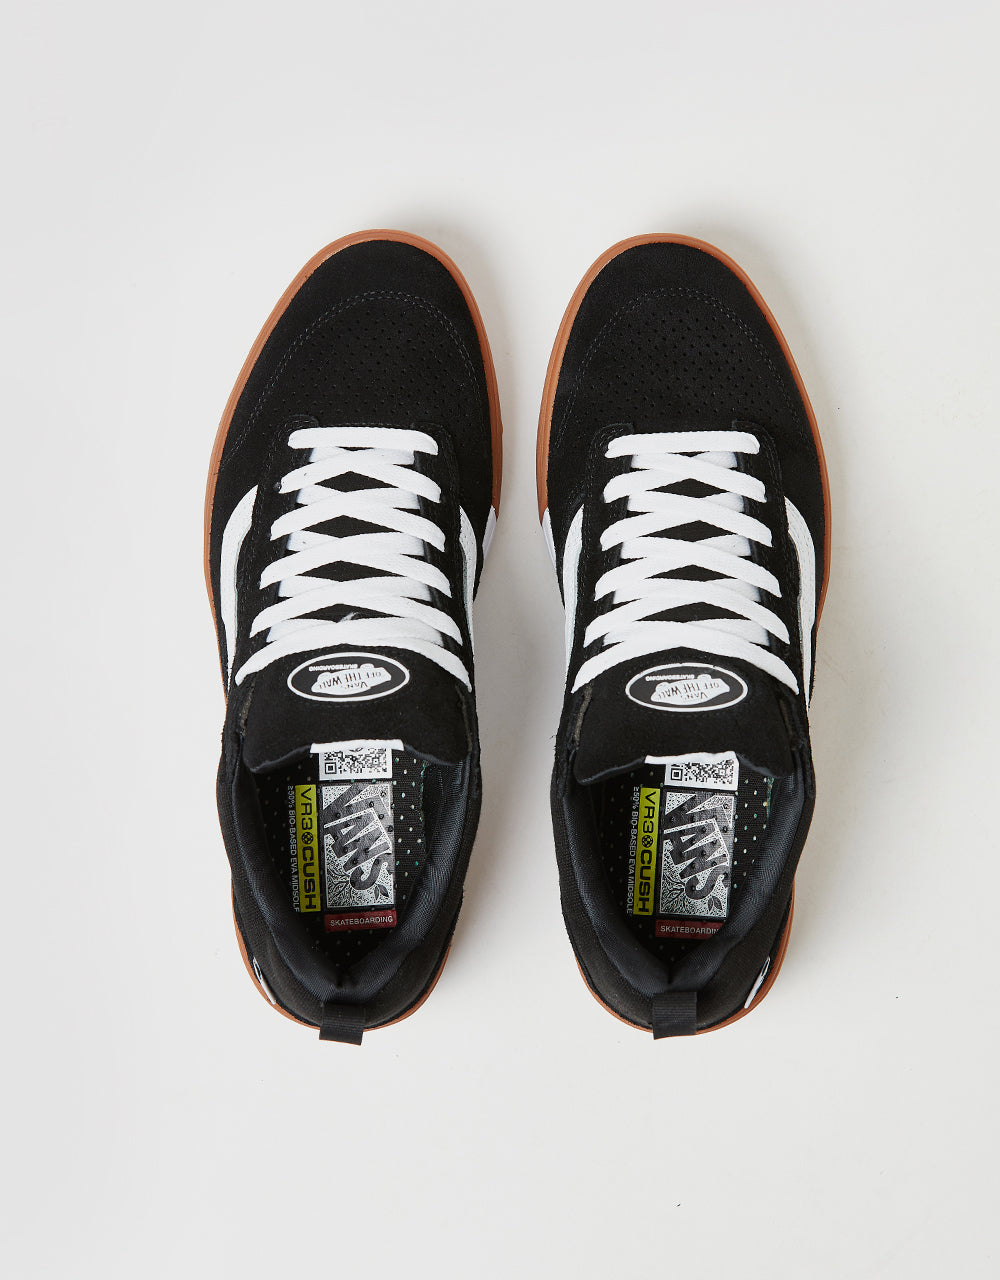 Vans Zahba Skate Shoes -  Black/Gum